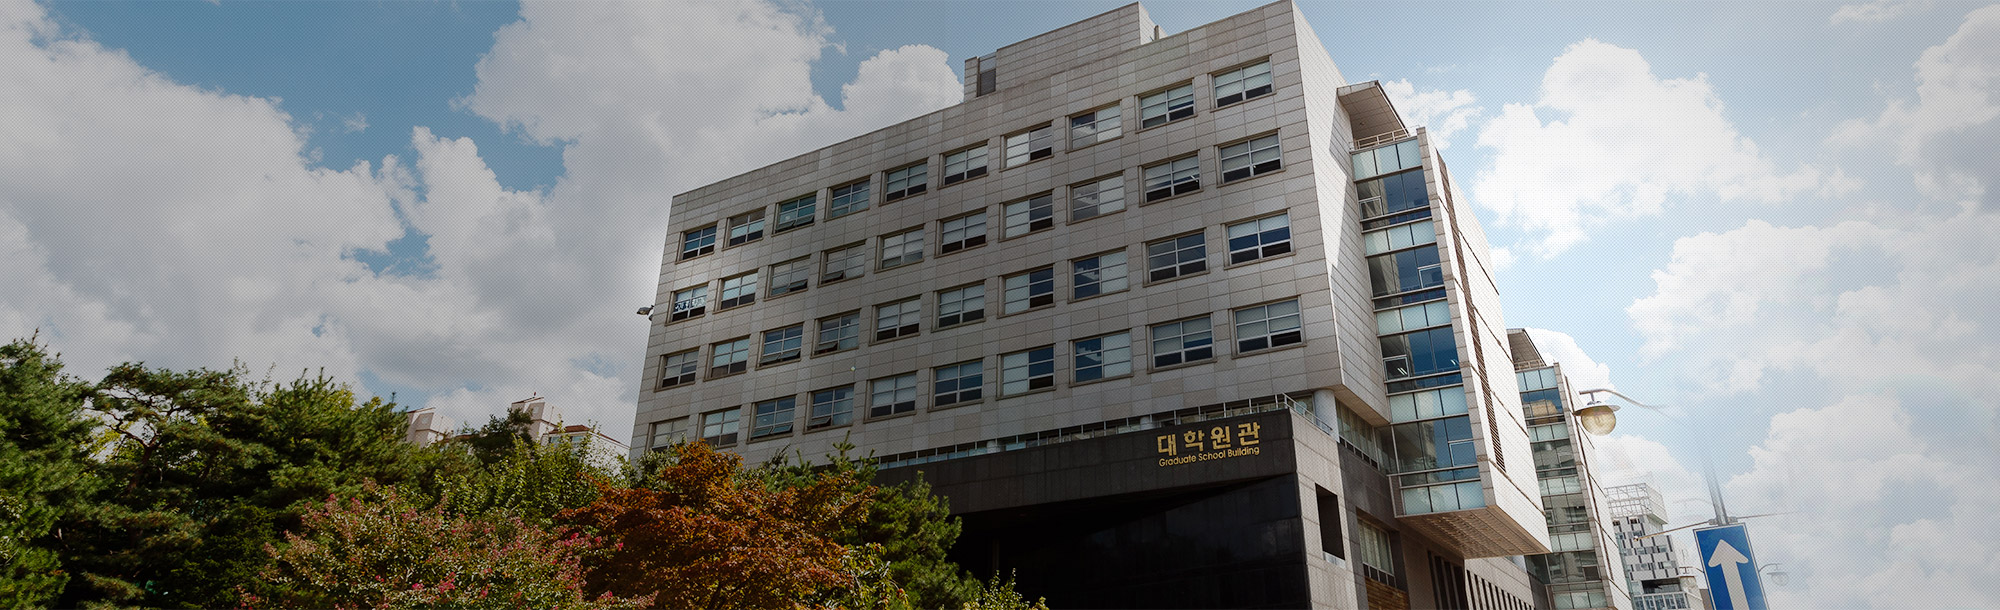 Graduate School of Hansei University